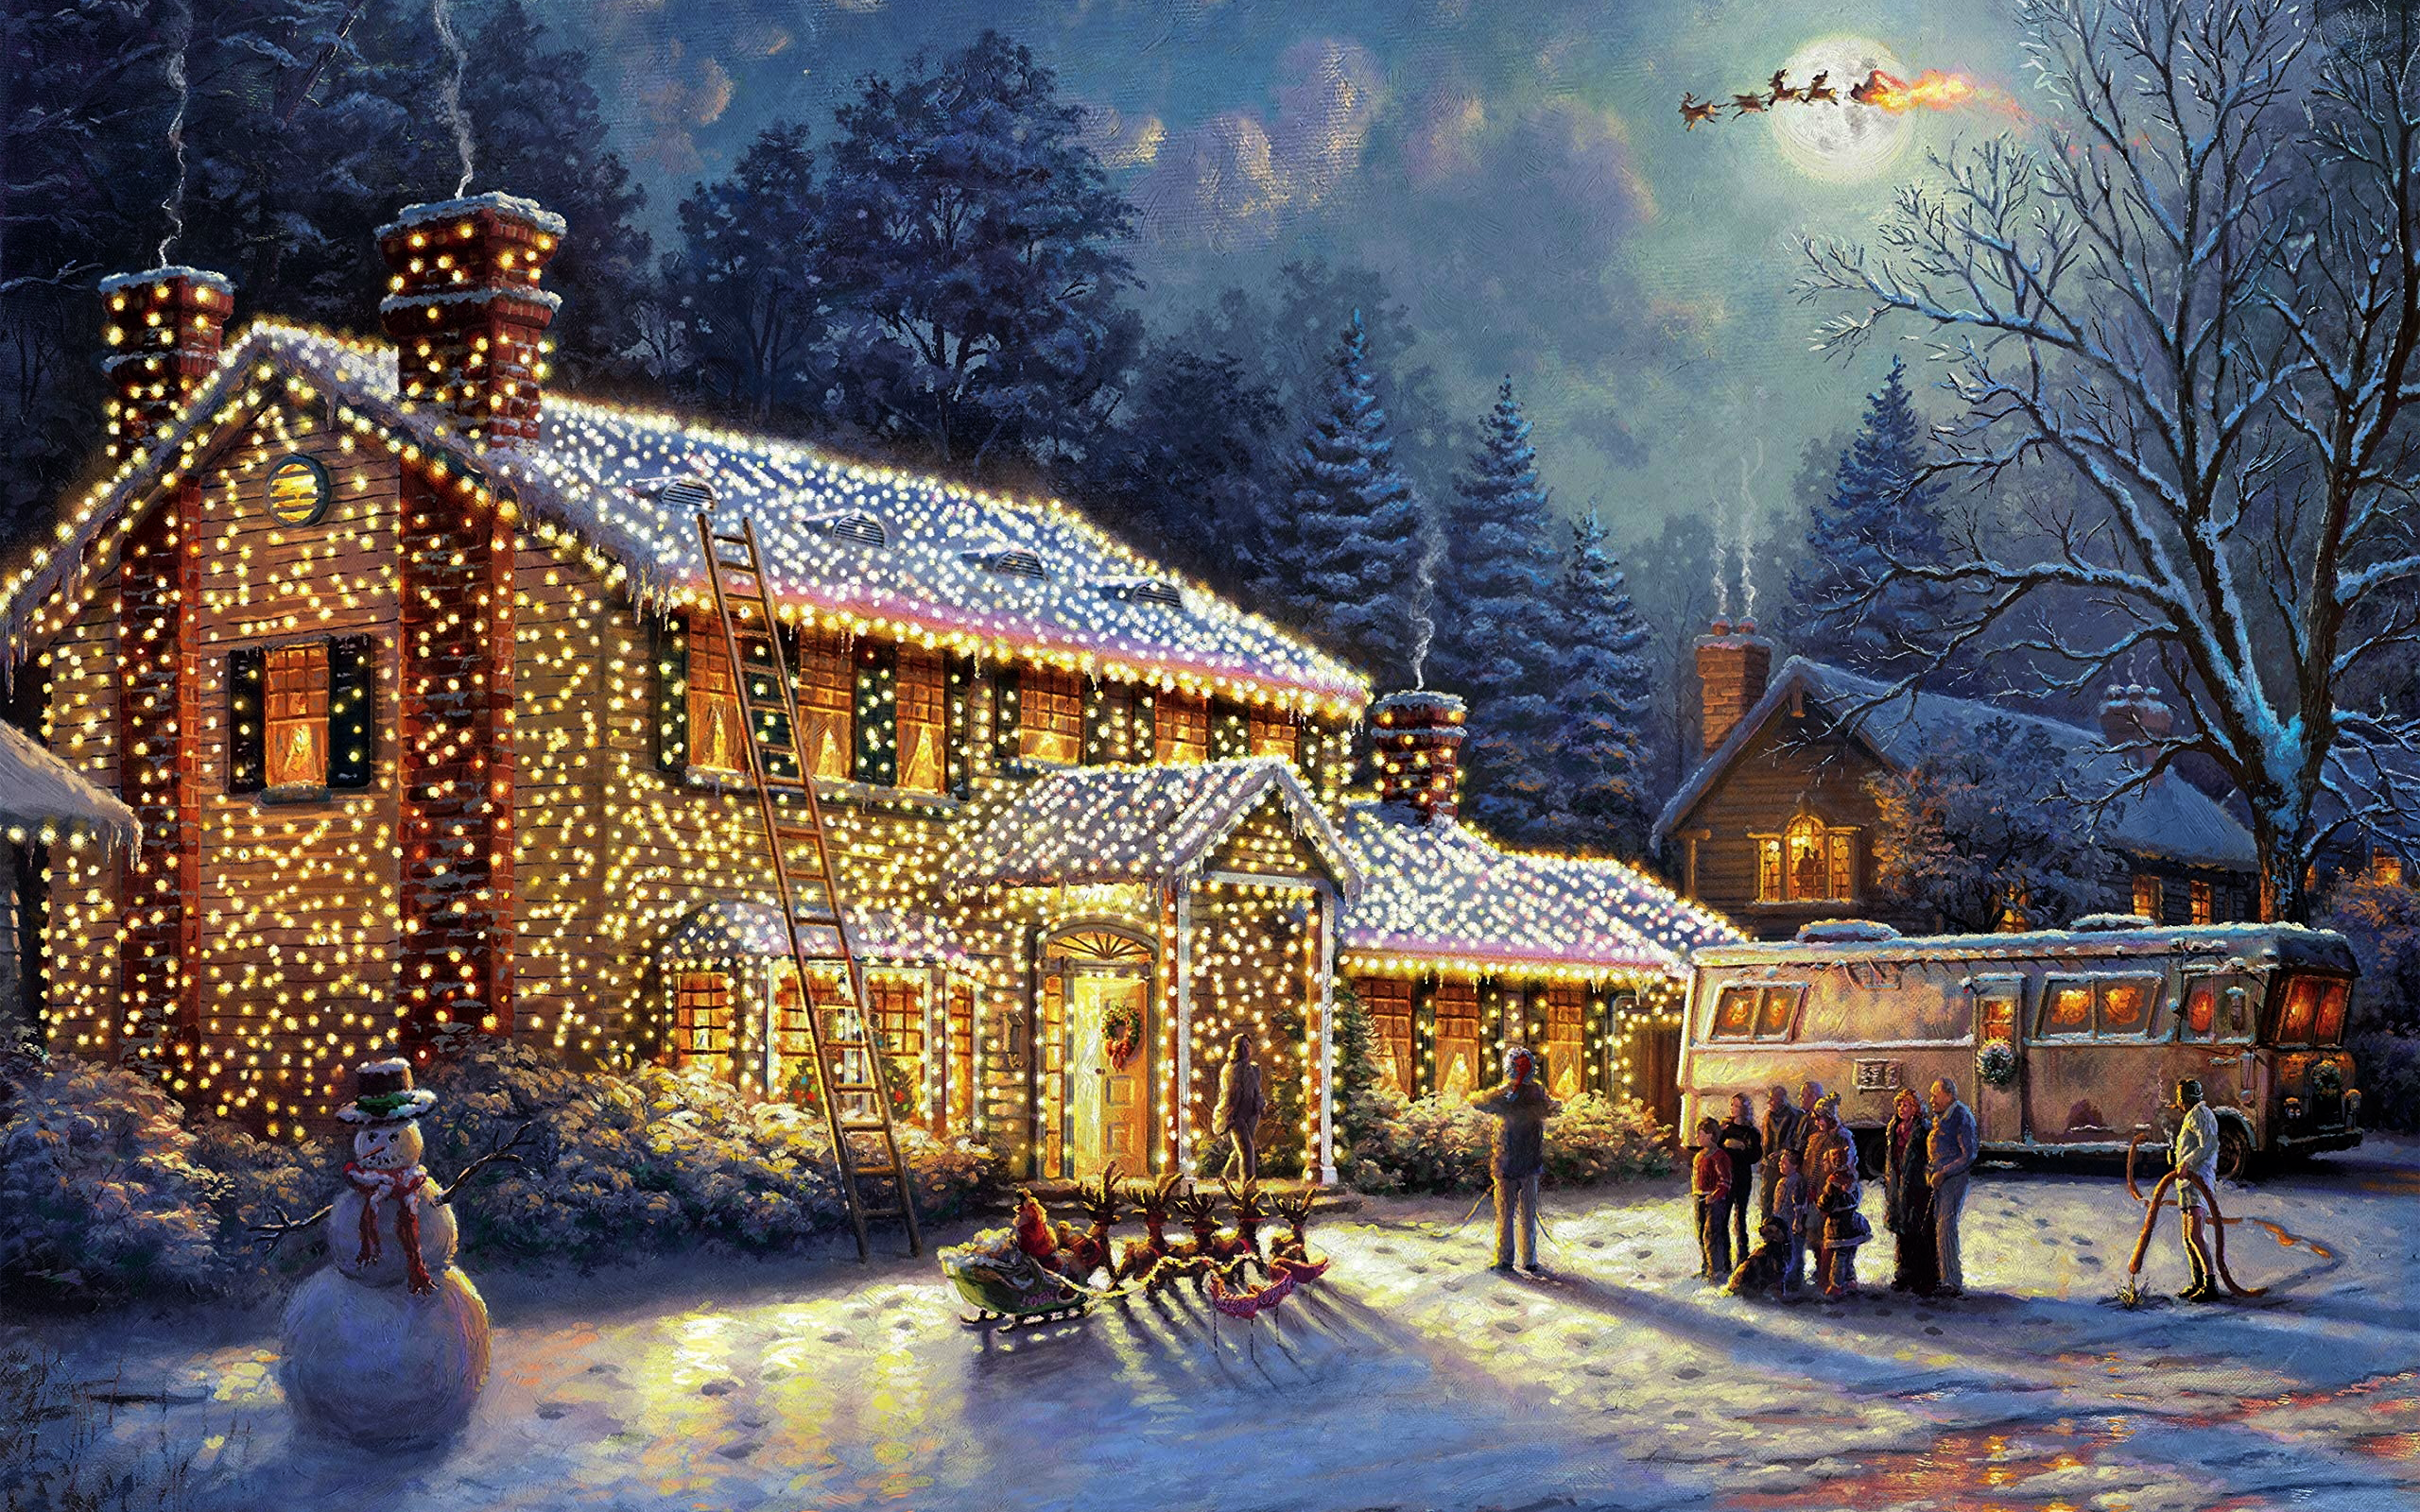 General 2560x1600 Christmas movies oil painting painting artwork snow trees Santa Claus lights snowman humor